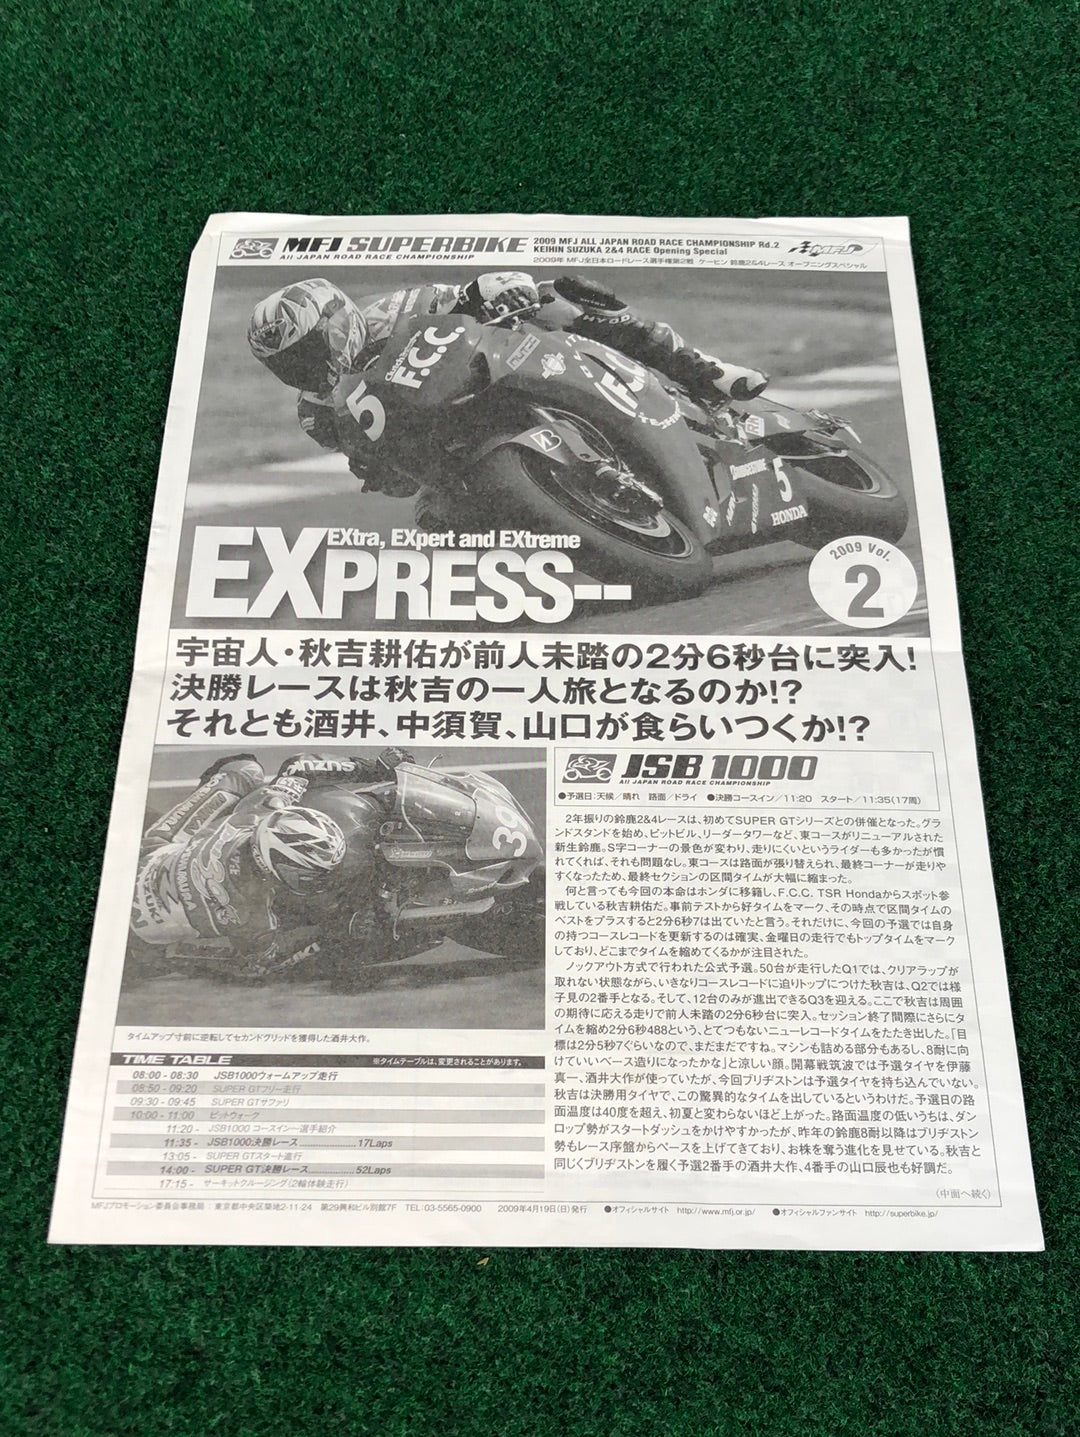 2009 SuperGT & MFJ Superbike Official Suzuka Circuit Program